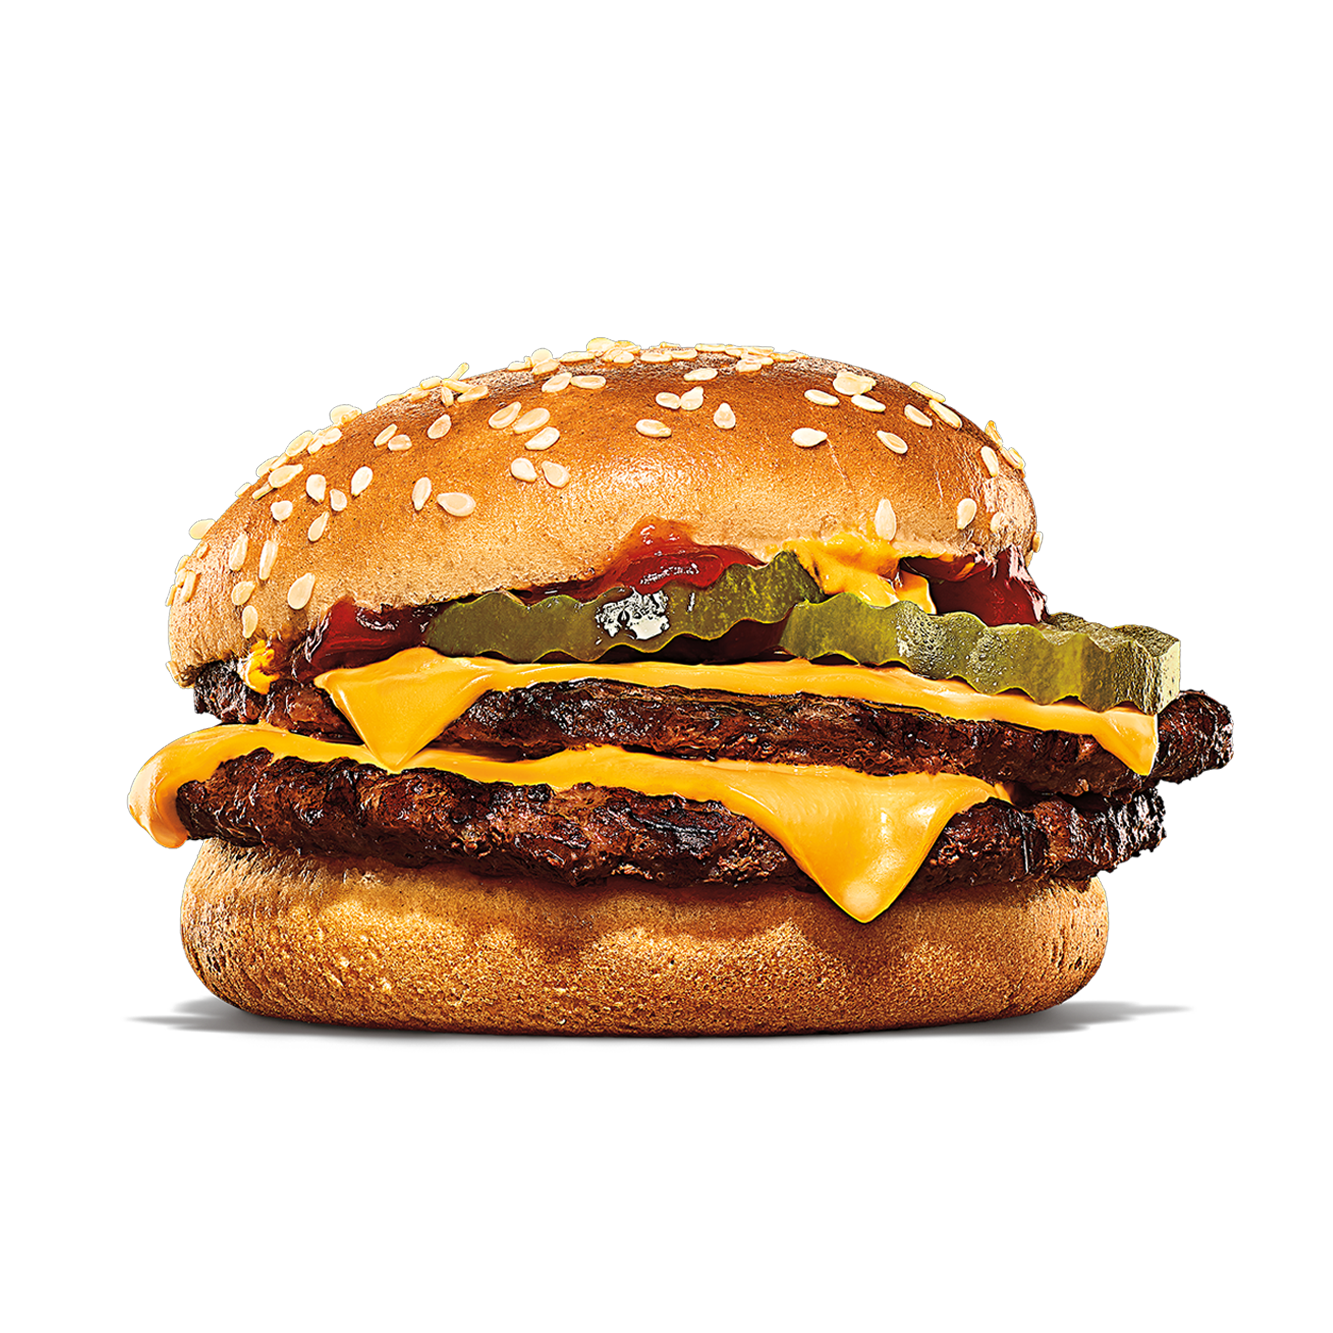 Burger King Sioux Falls (605)215-5526